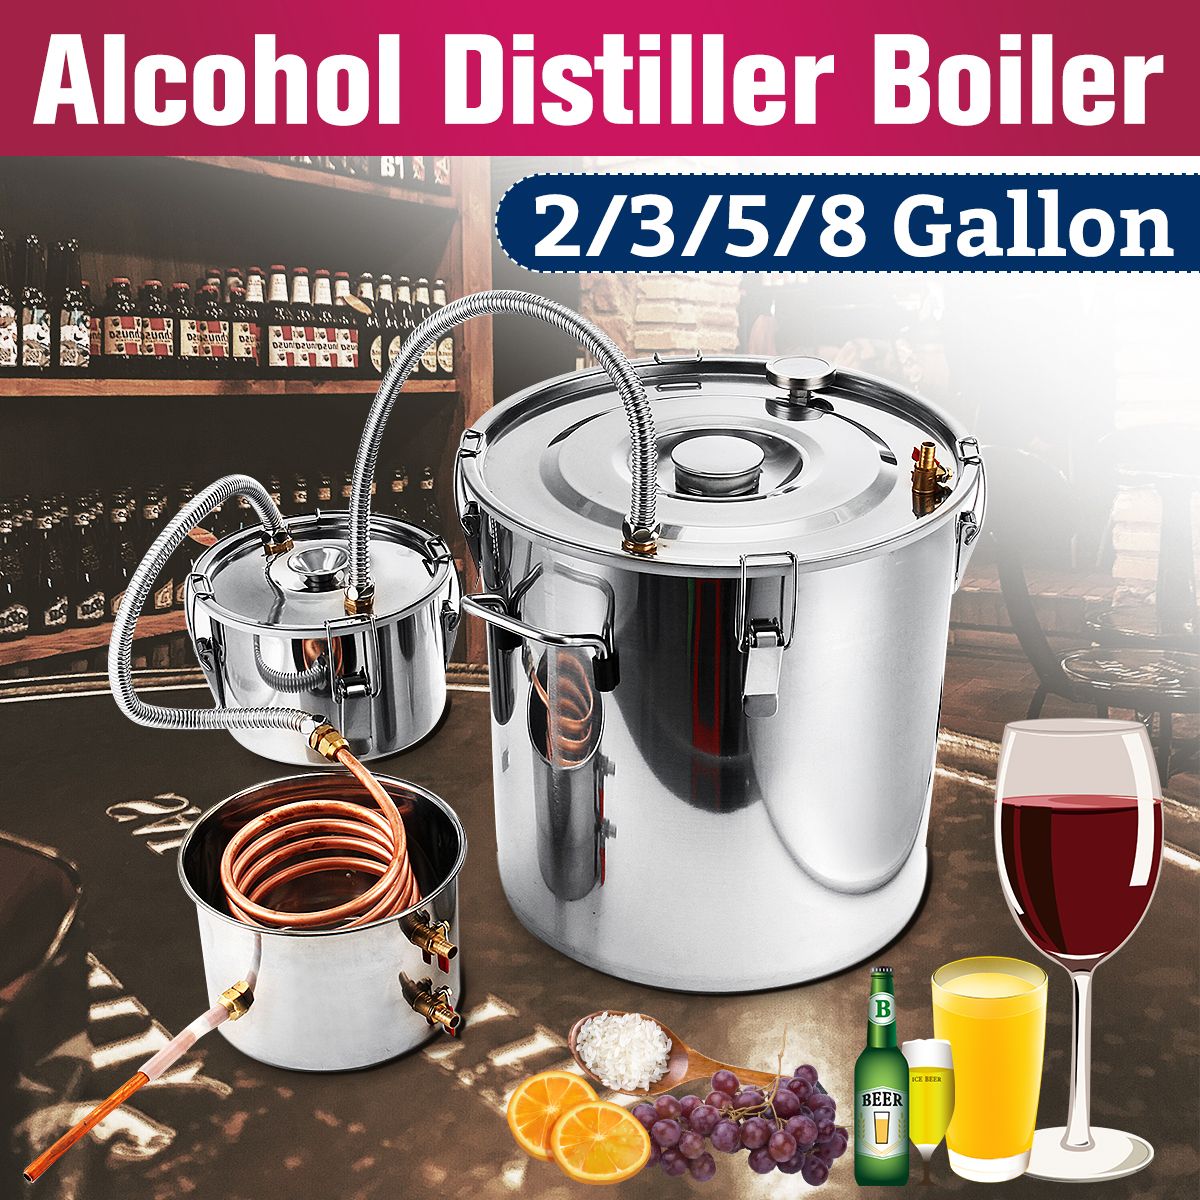 2358-Gallons--Moonshine-Still-Spirits-Kit-Water-Alcohol-Distiller-Copper-Tube-Boiler-Home-Brewing-Ki-1667164